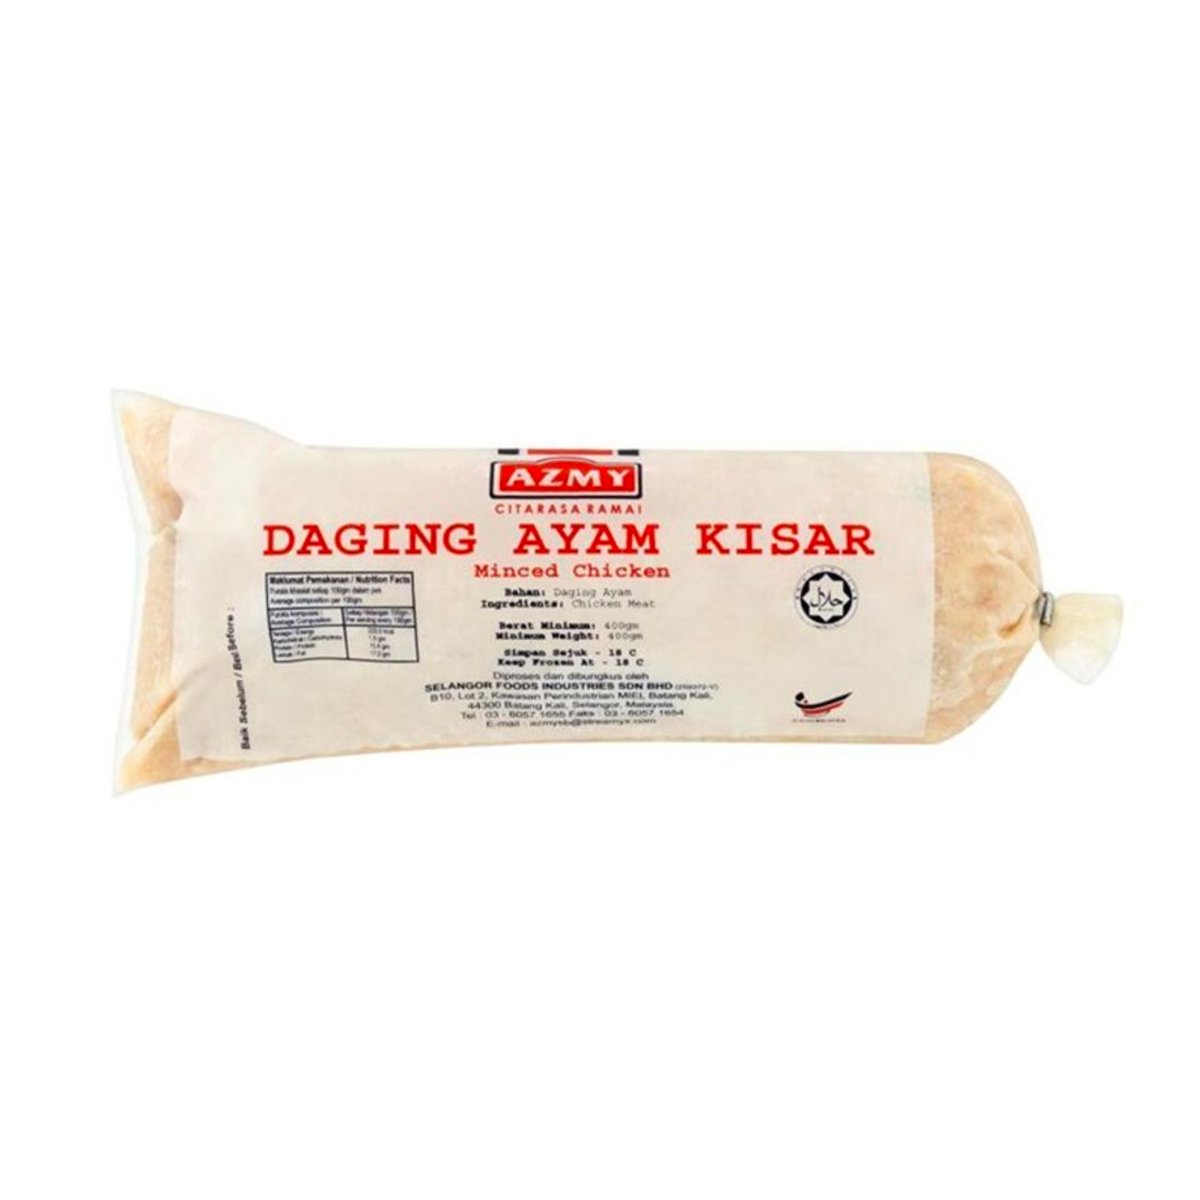 Azmy Daging Ayam Kisar 400g